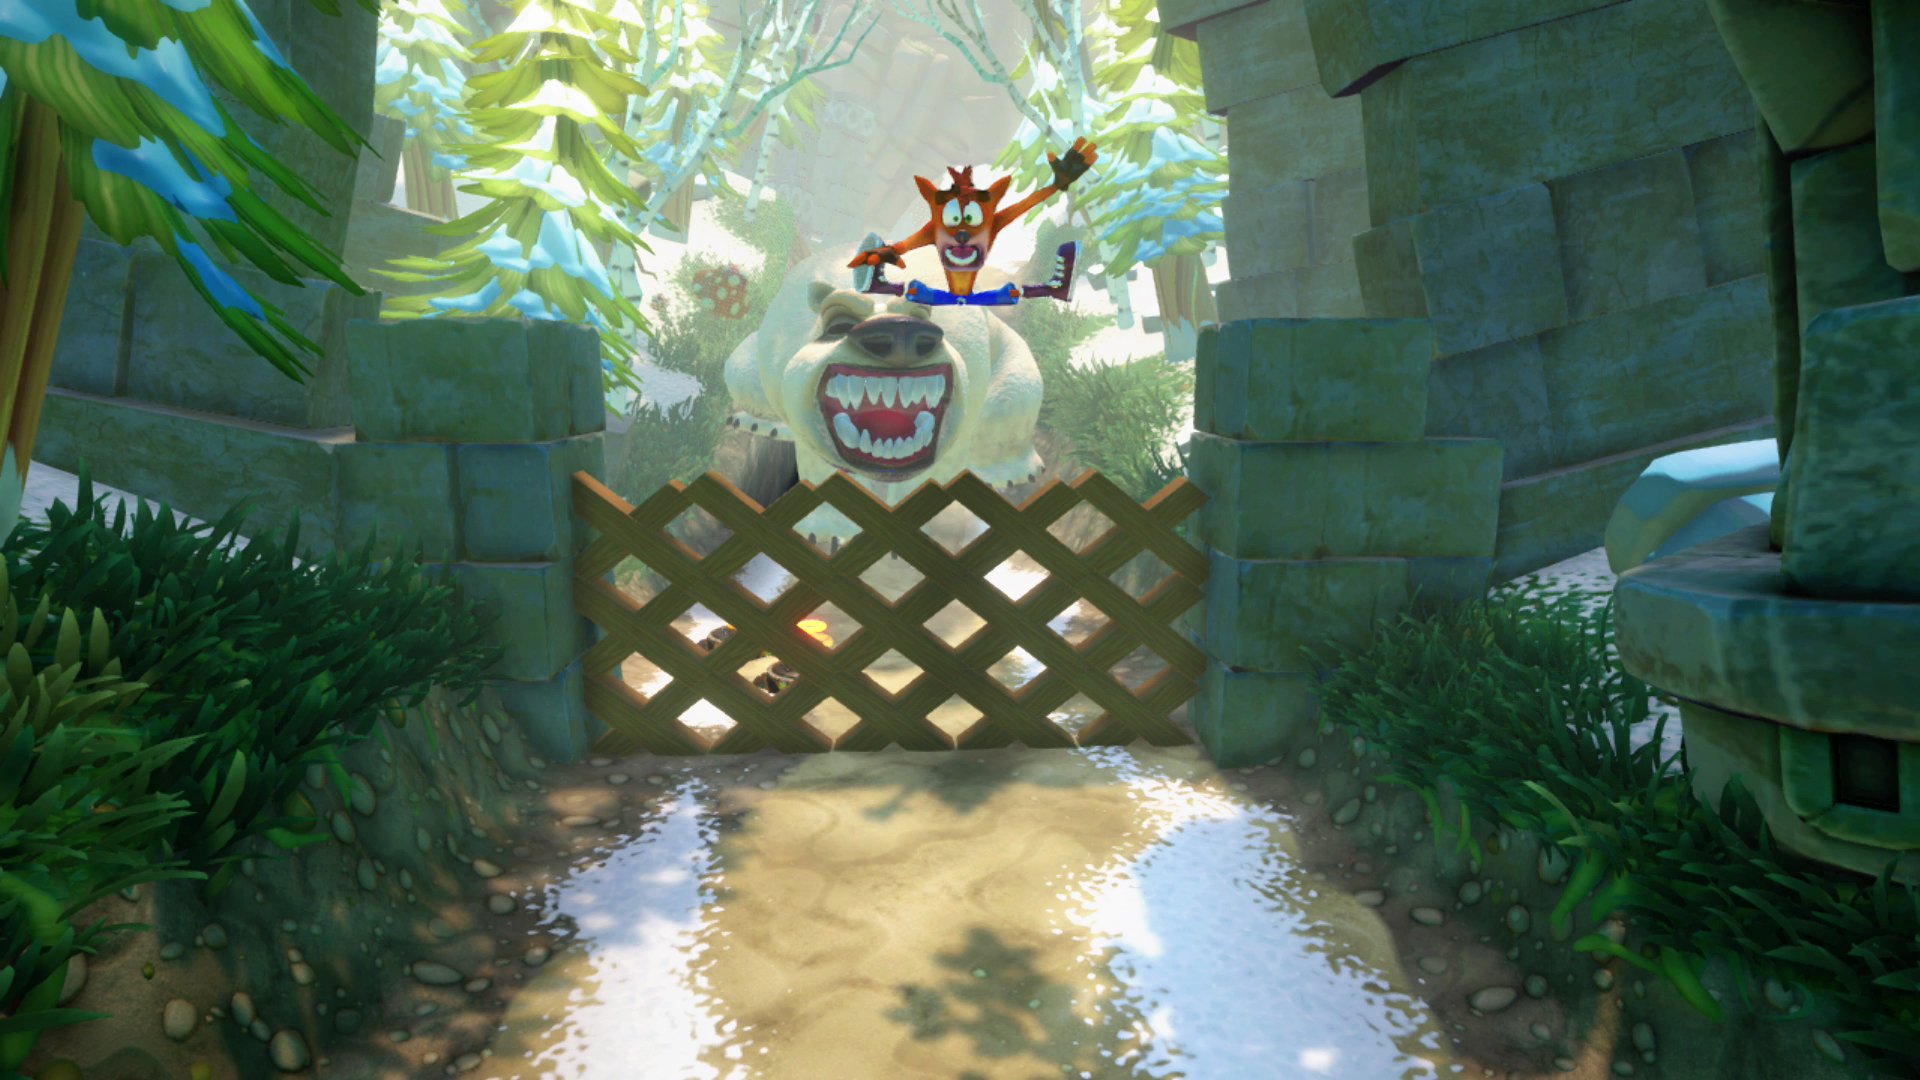 Crash Bandicoot gameplay on Nintendo Switch